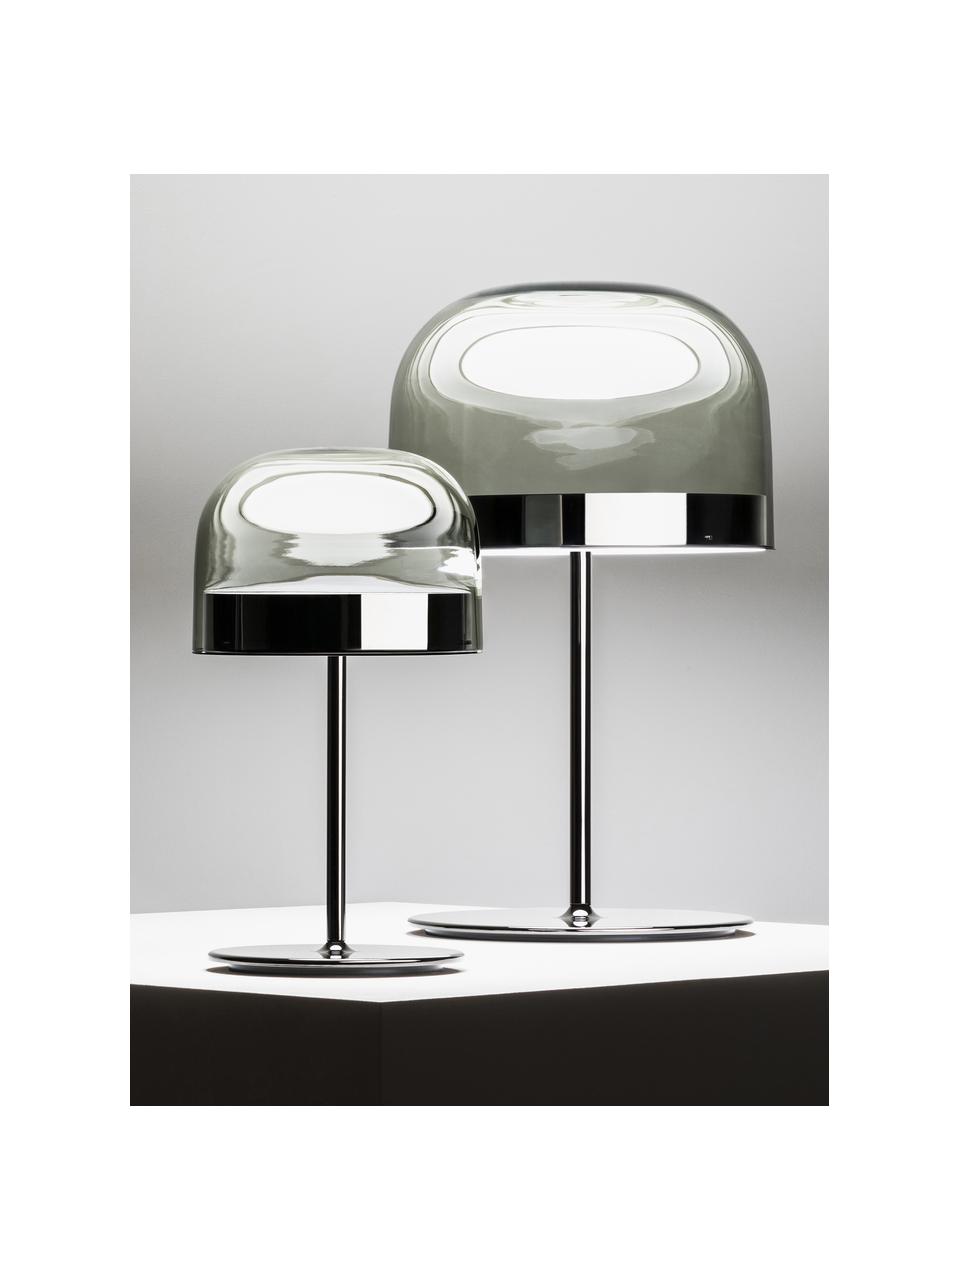 Handgemaakte LED tafellamp Equatore, Lampenkap: glas, gegalvaniseerd meta, Transparant, zwart, Ø 24 x H 43 cm